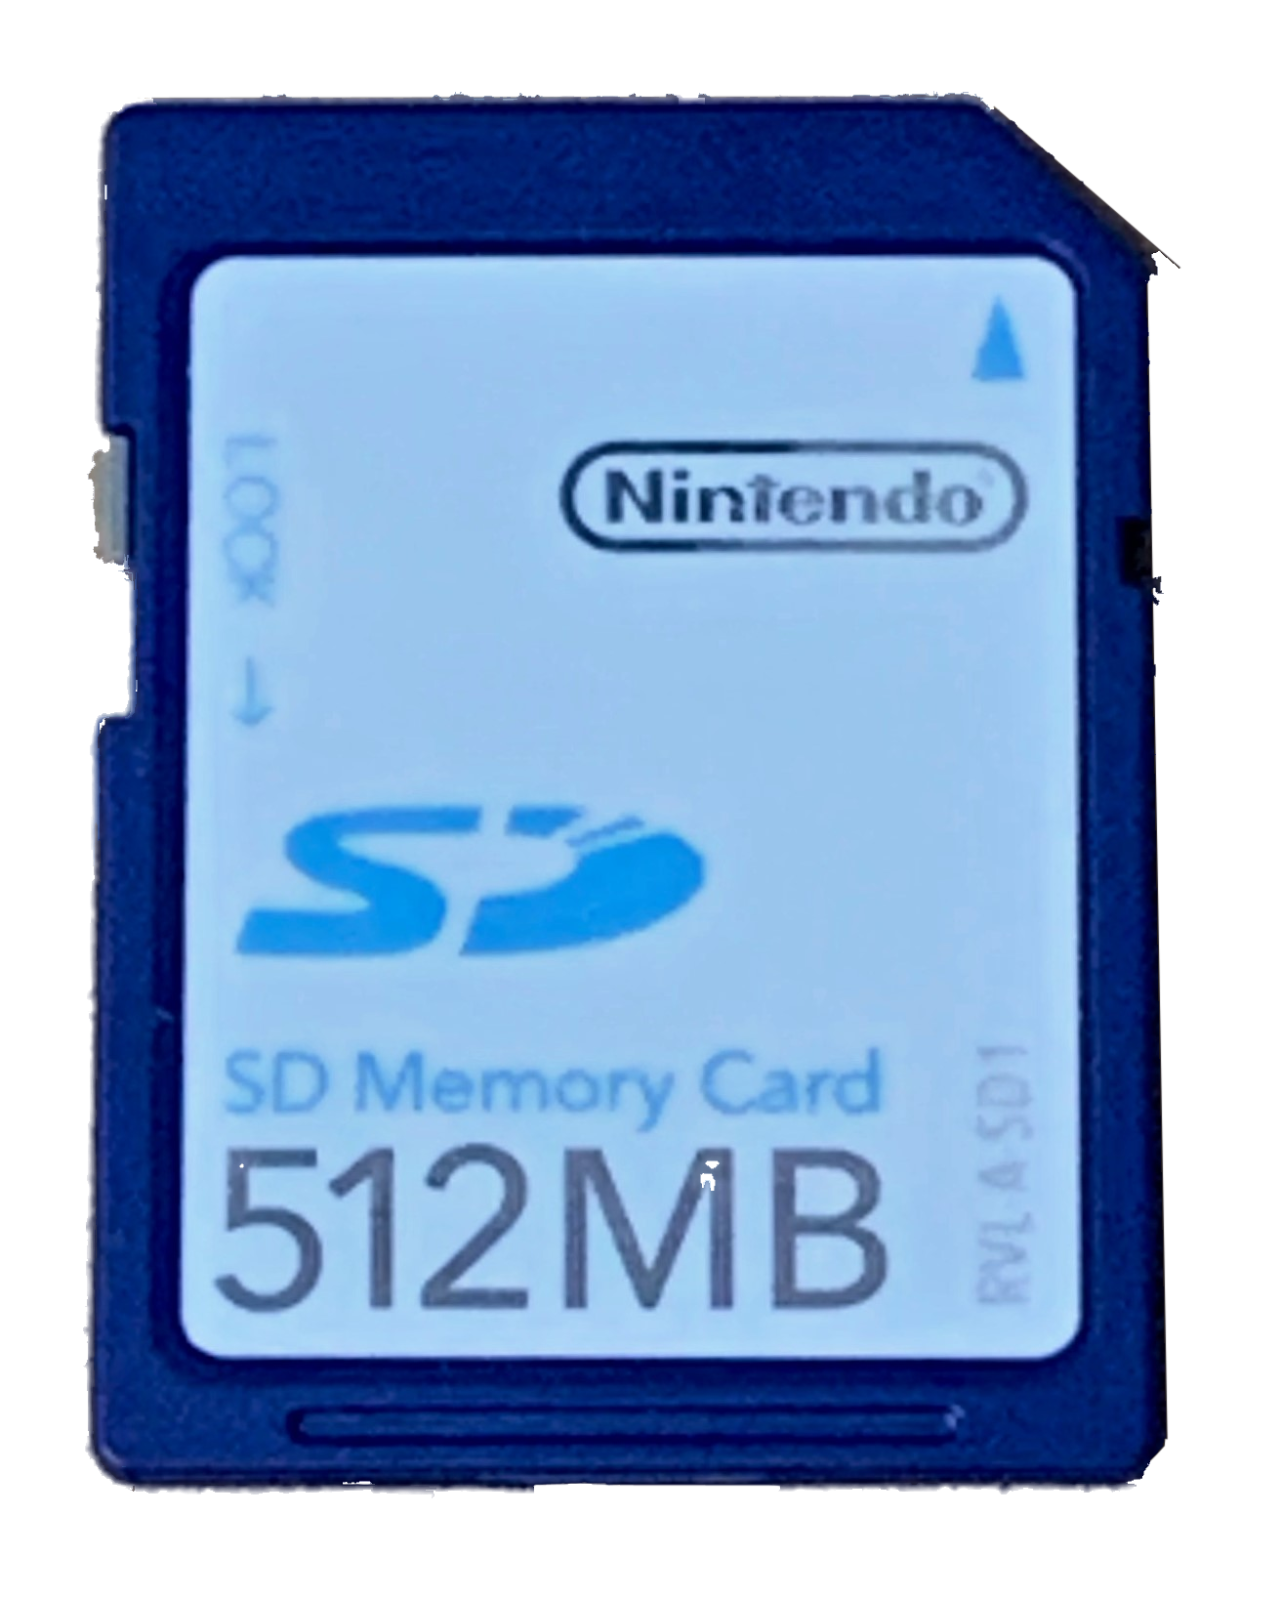  Nintendo Wii 512MB SD Card